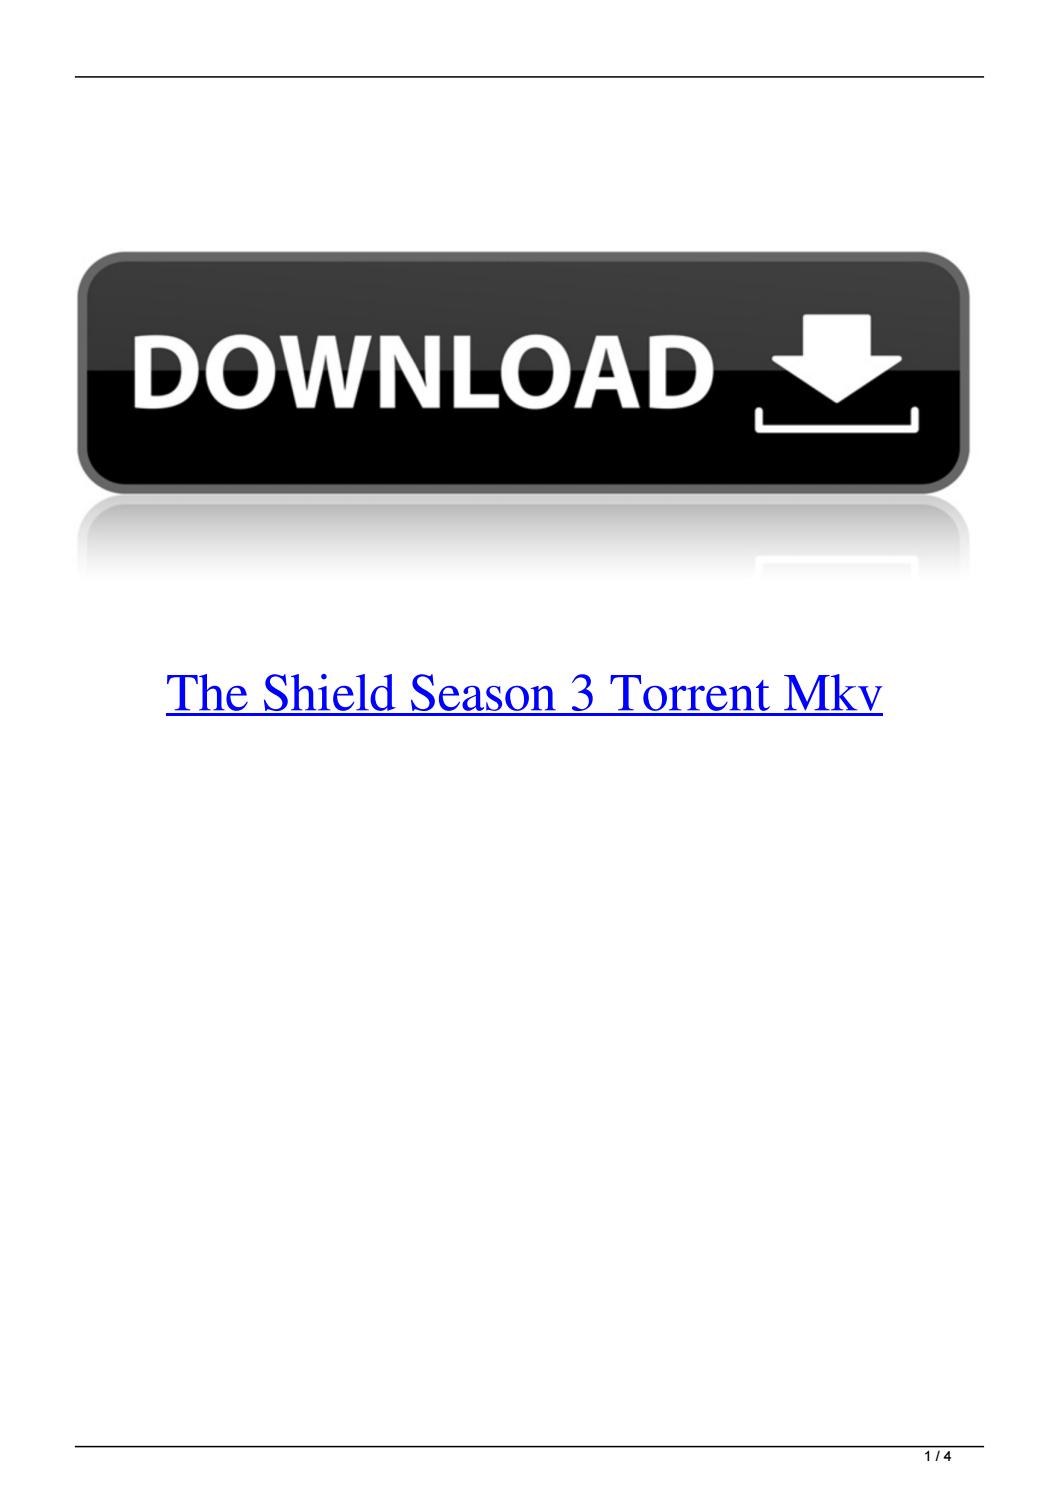 prison break season 4 torrent download kickass